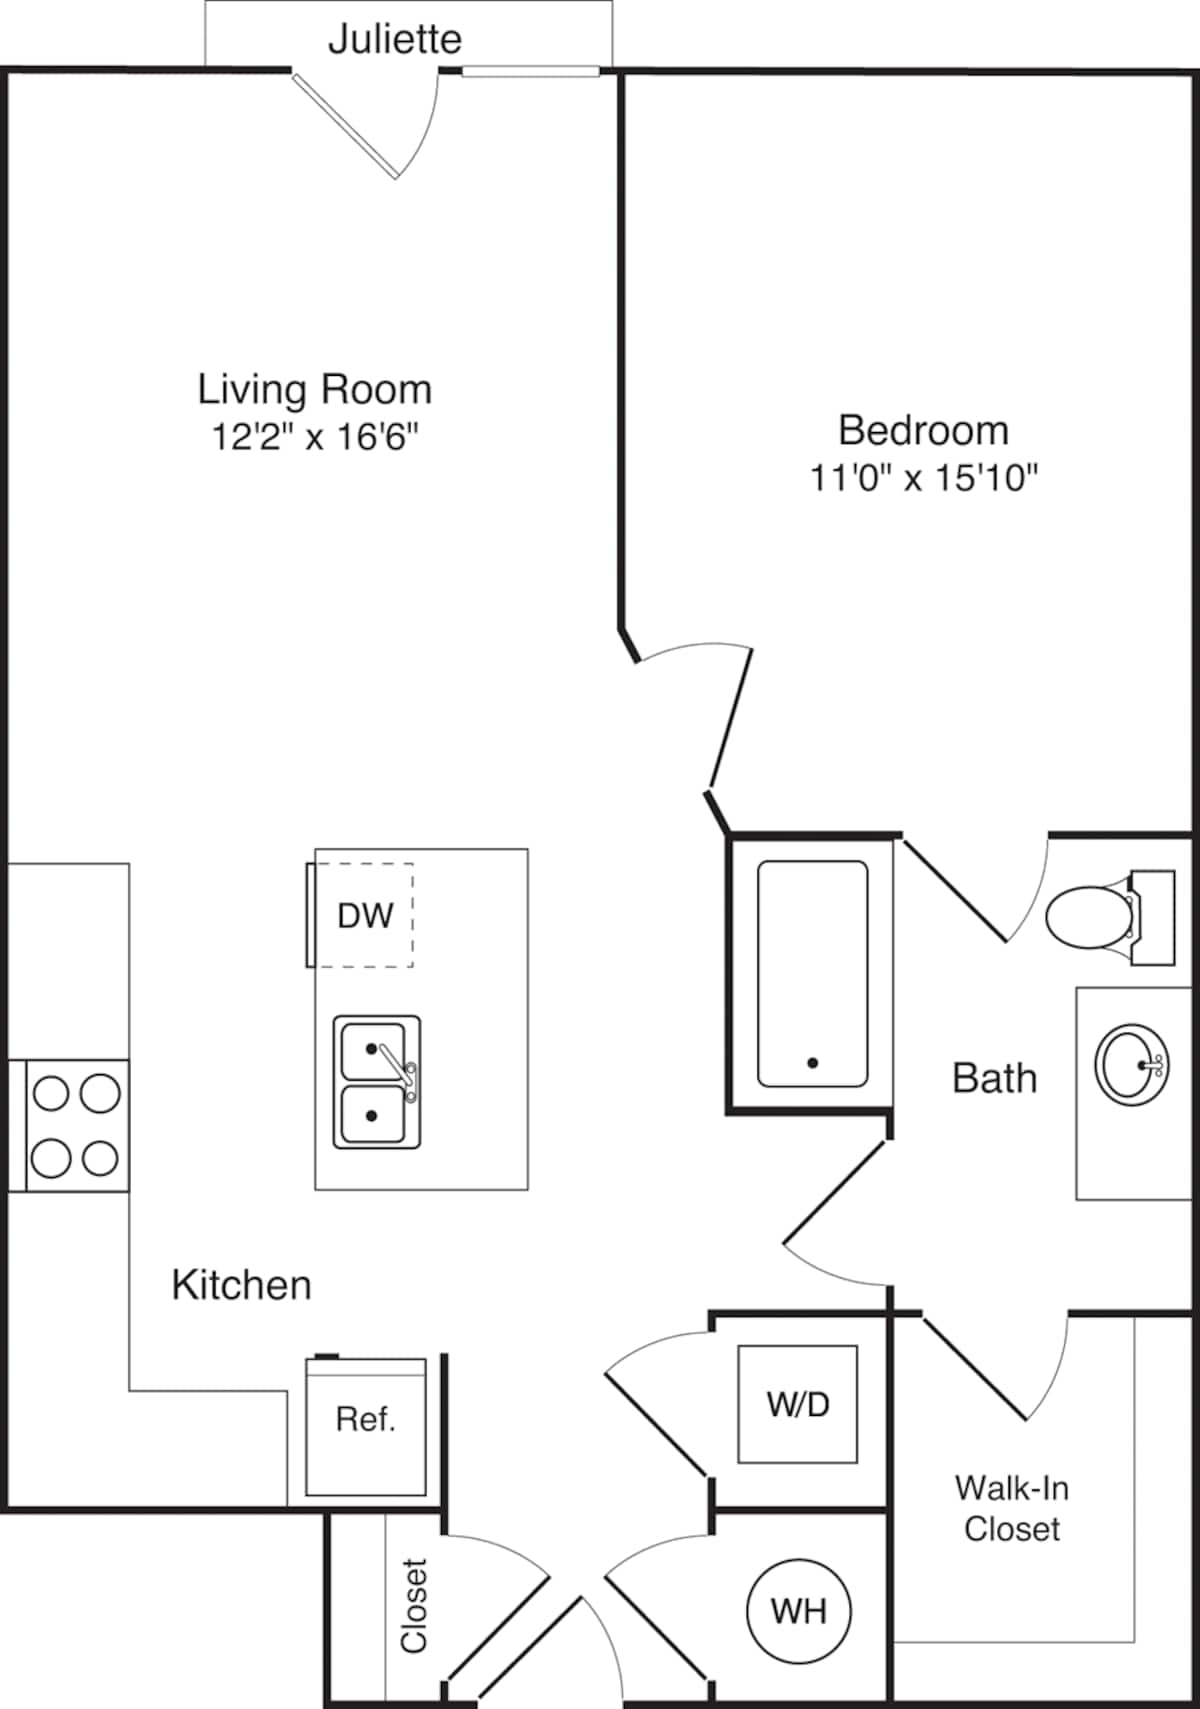 Floorplan diagram for A8, showing 1 bedroom